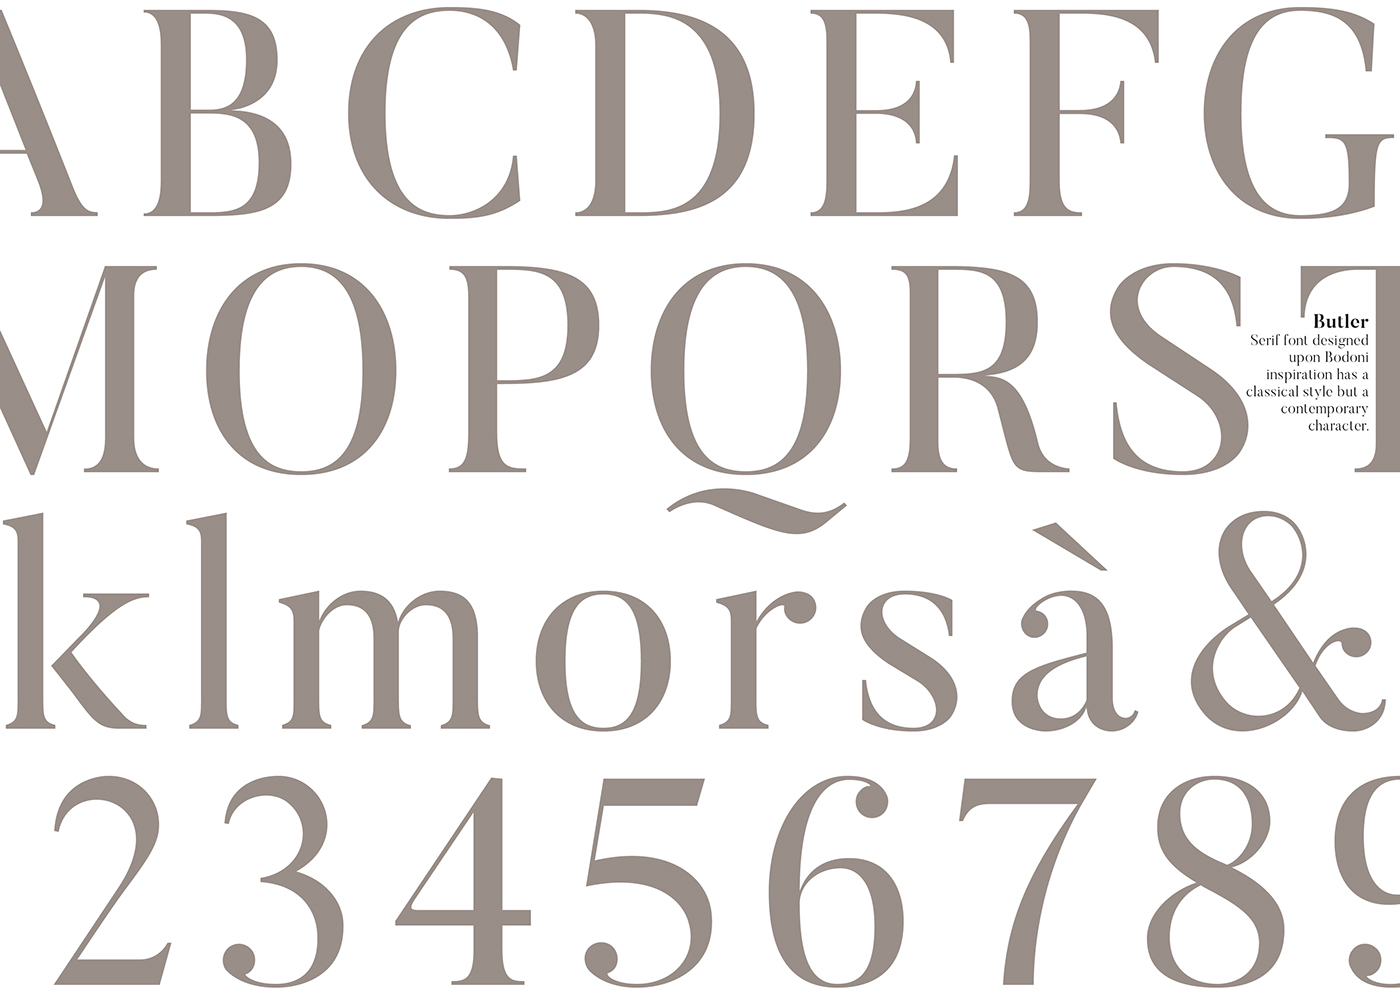 spoleto italia umbria branding  logo grafica butler Logo Design Direzione artistica print adv